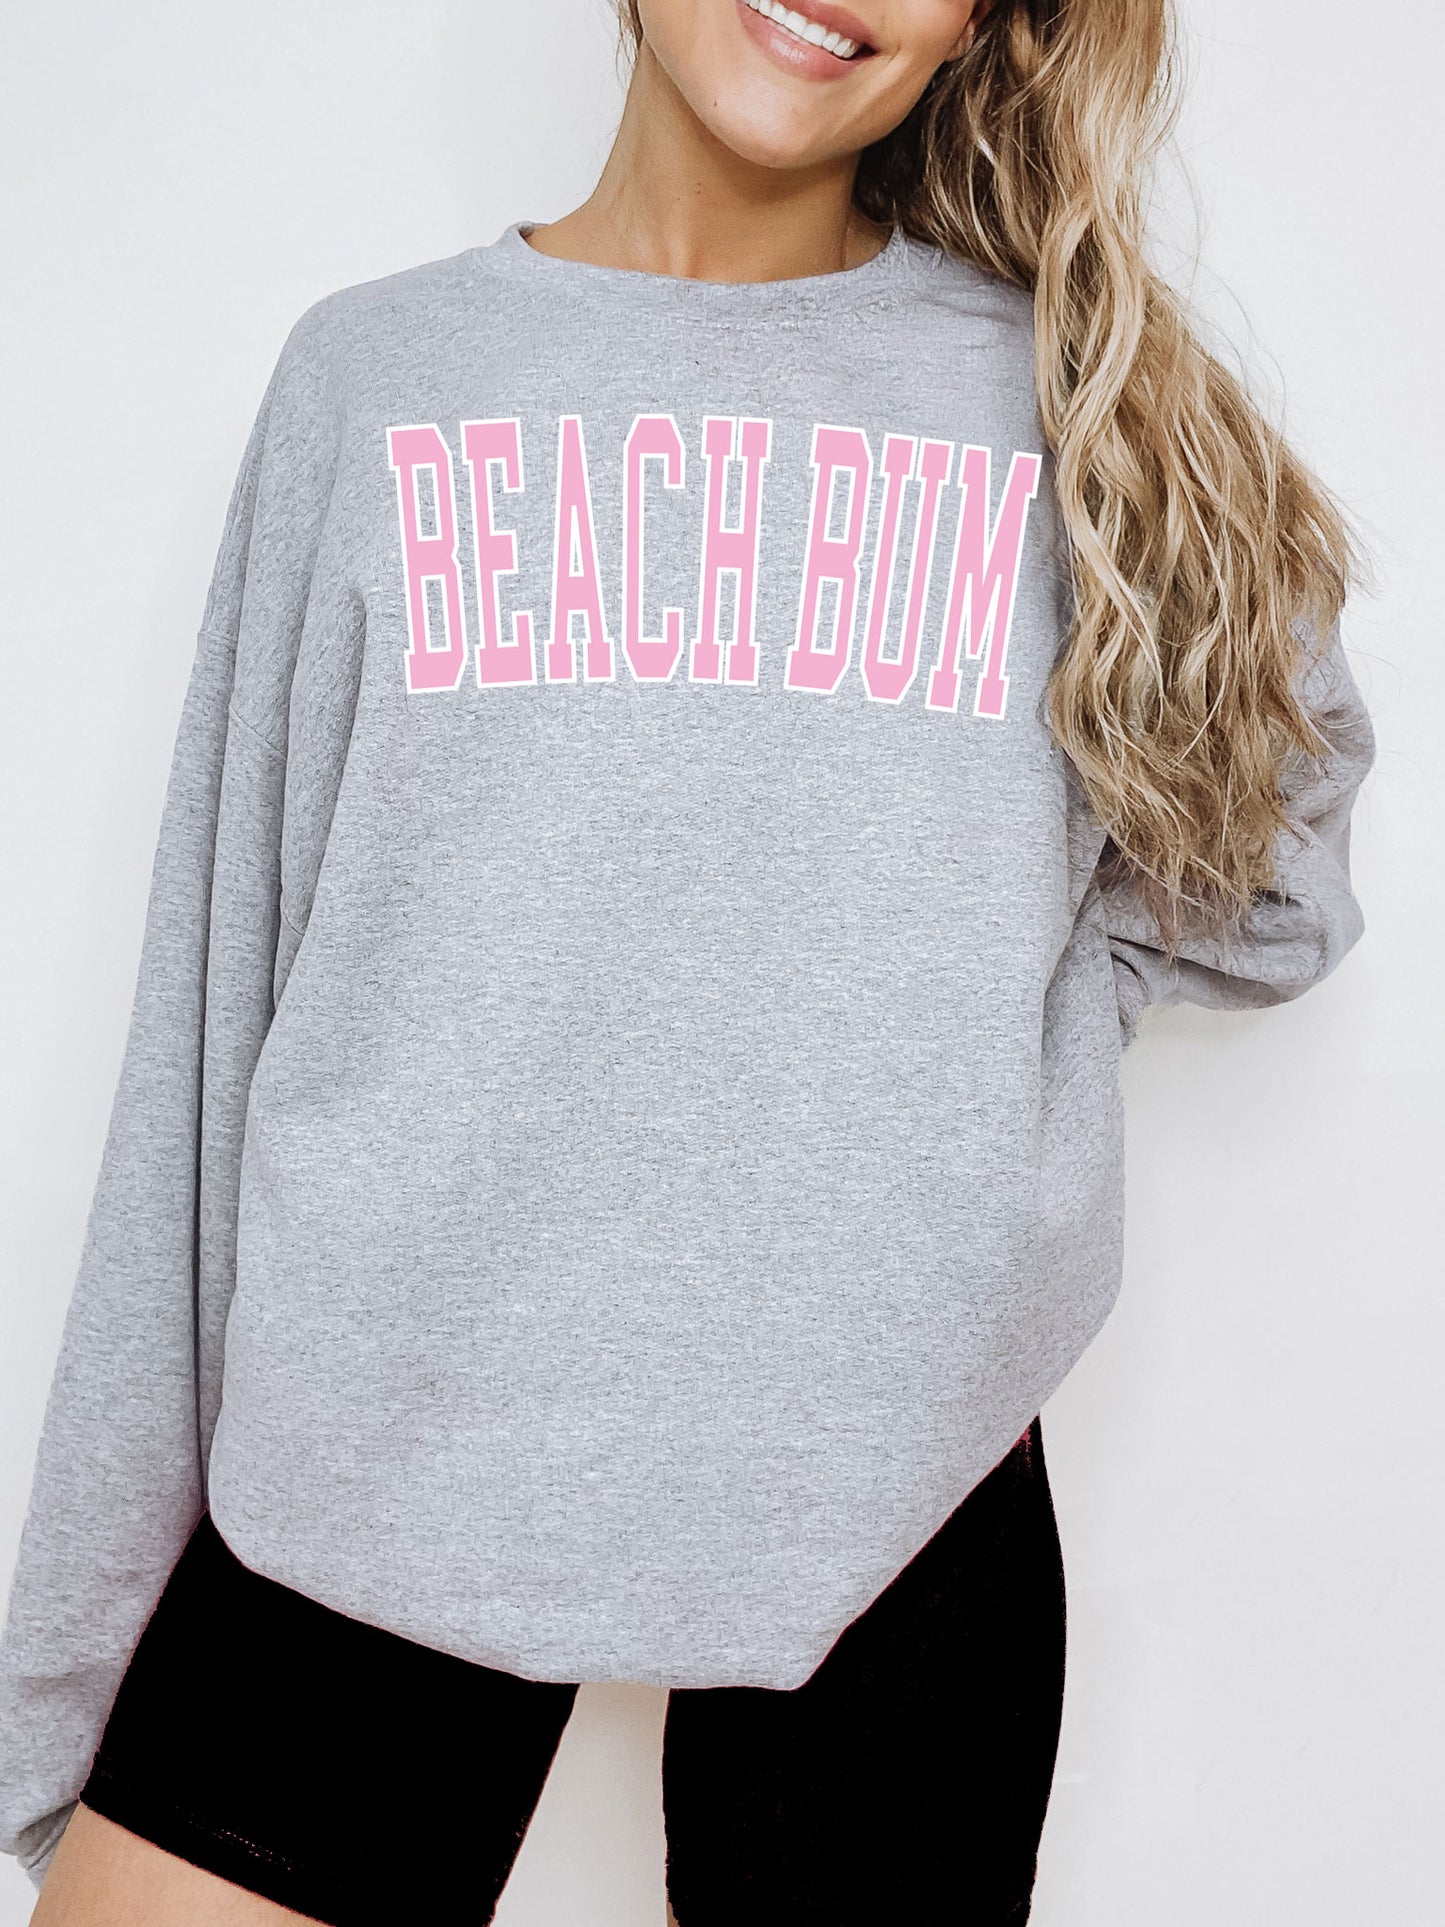 Beach Bum Sweatshirt - Pink Ink